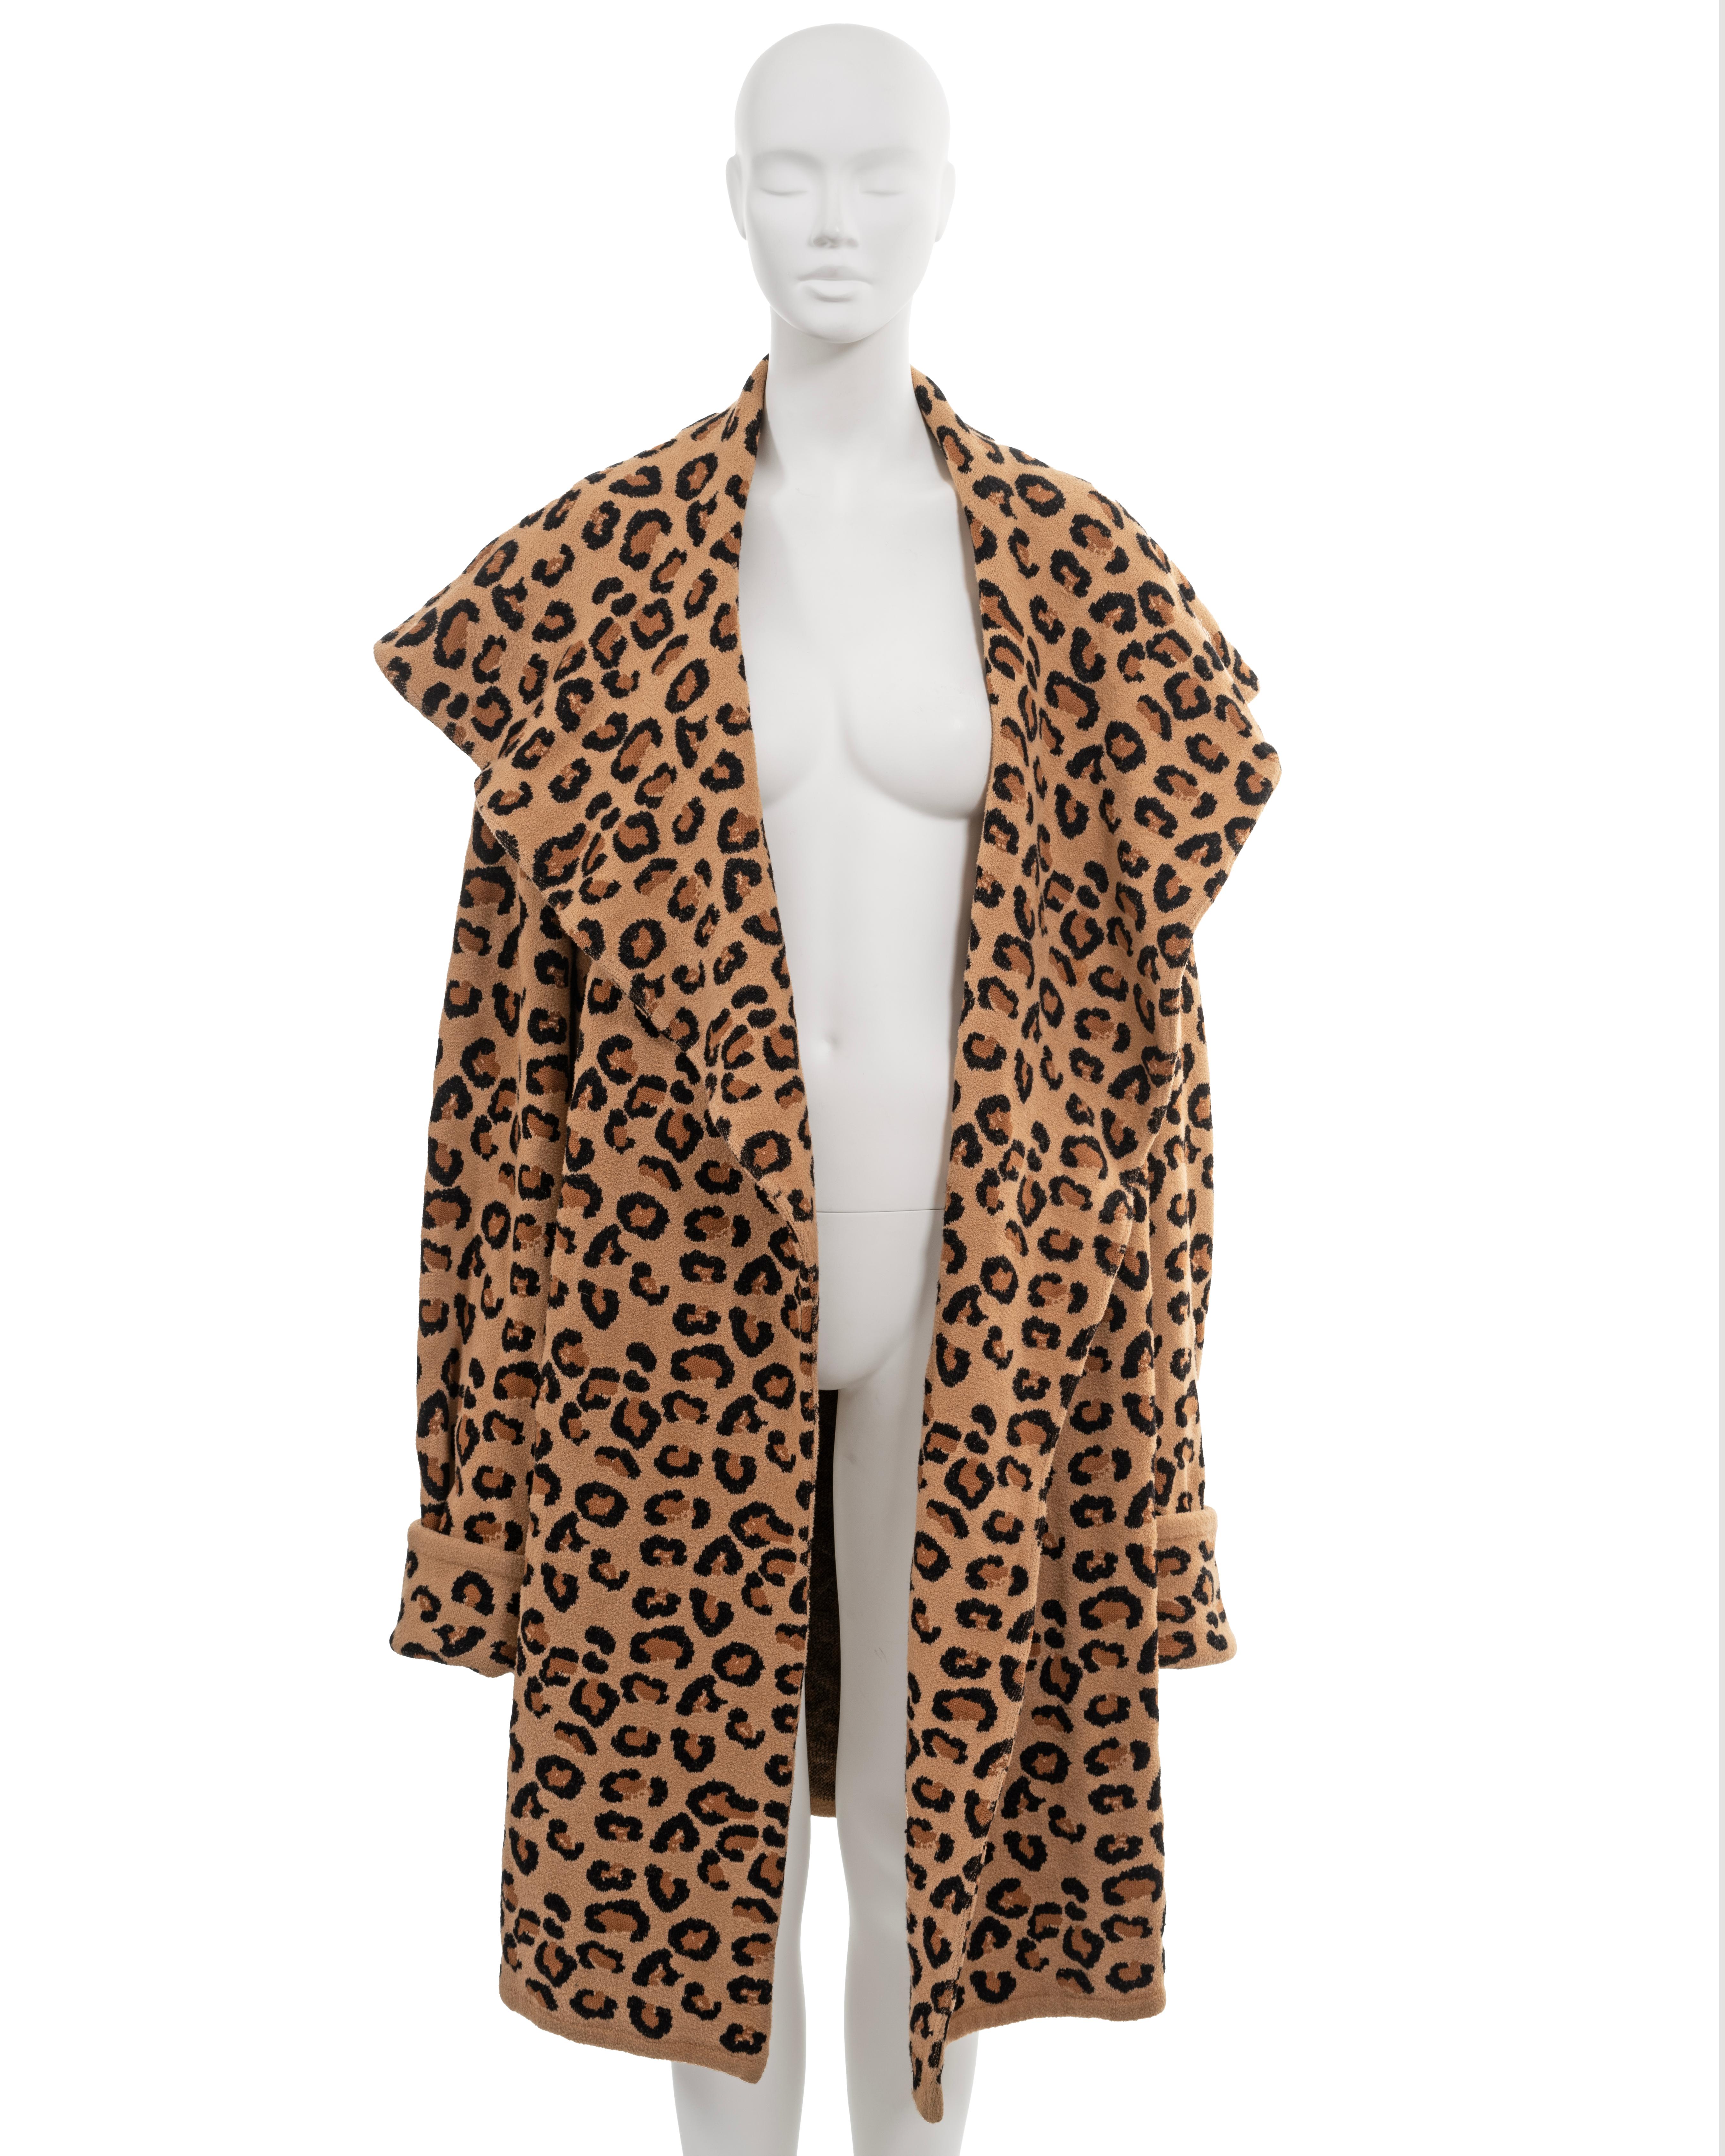 Azzedine Alaia leopard jacquard-knit catsuit and coat runway ensemble, fw 1991 3